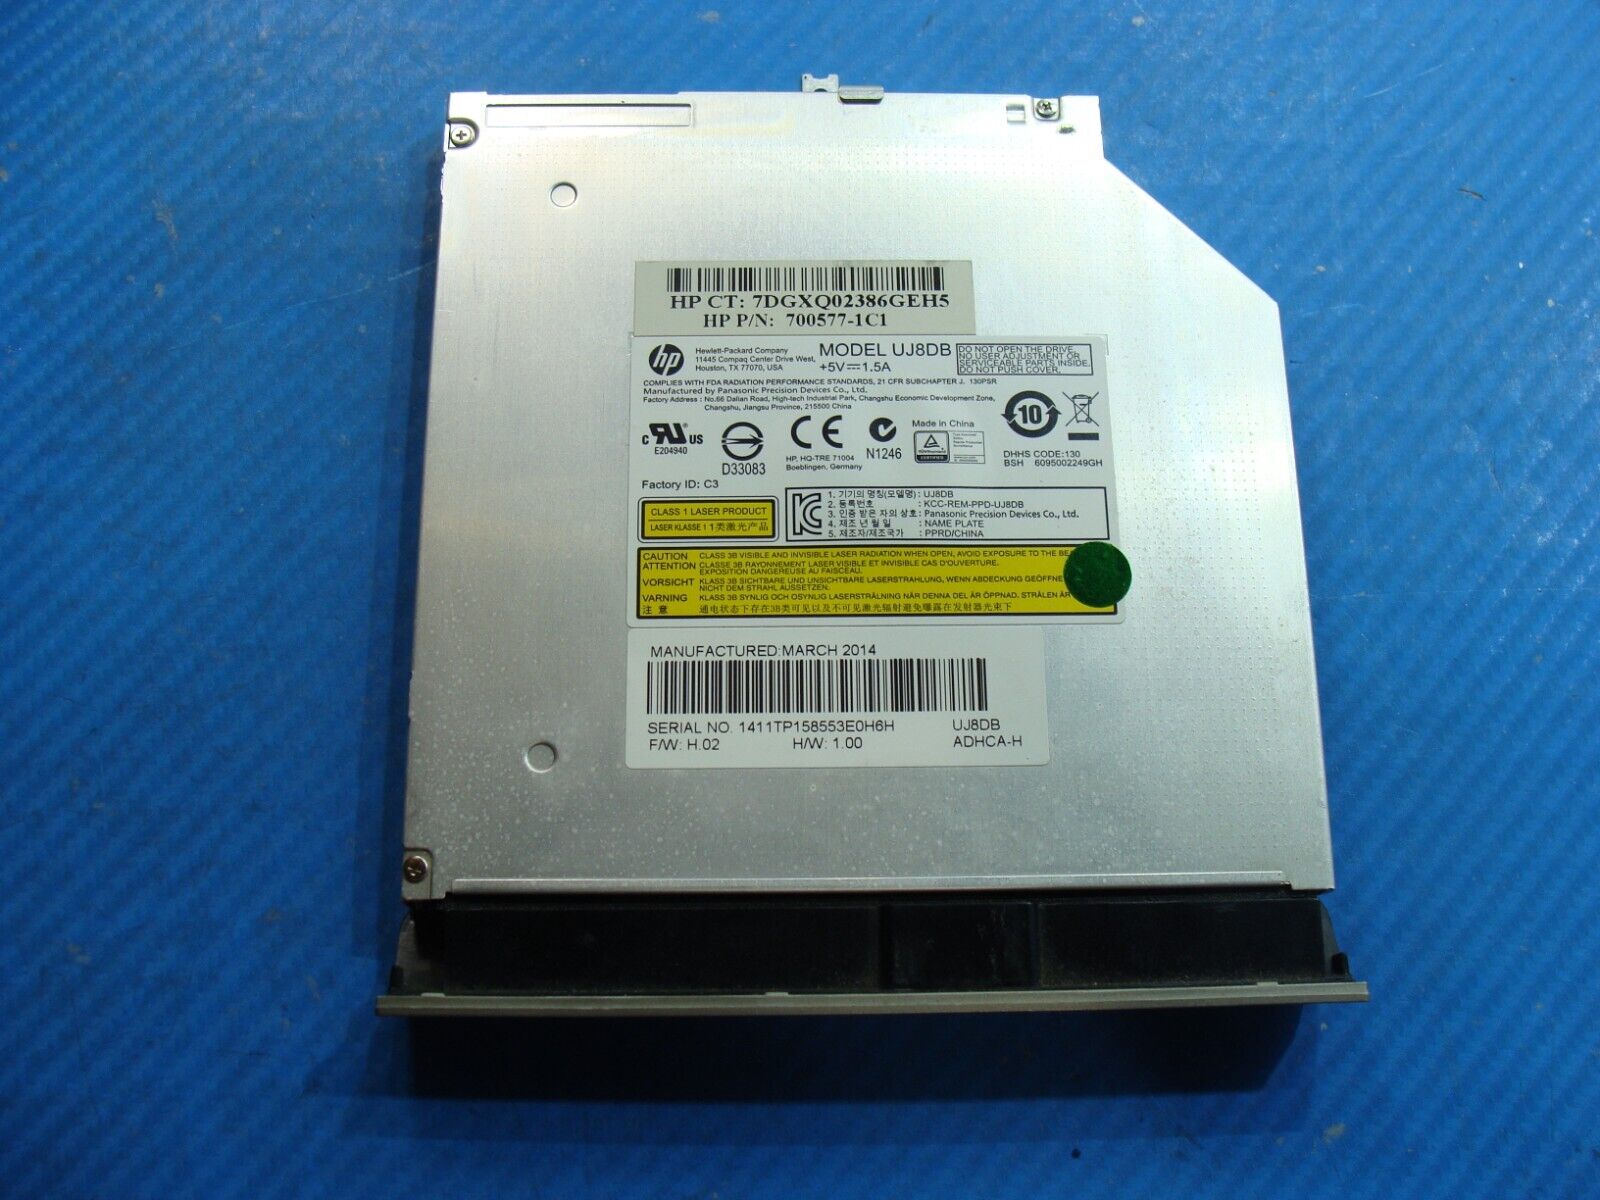 HP Envy TS 17.3” m7-J120dx Genuine Laptop DVD/CD Burner Drive 700577-1C1 UJ8DB